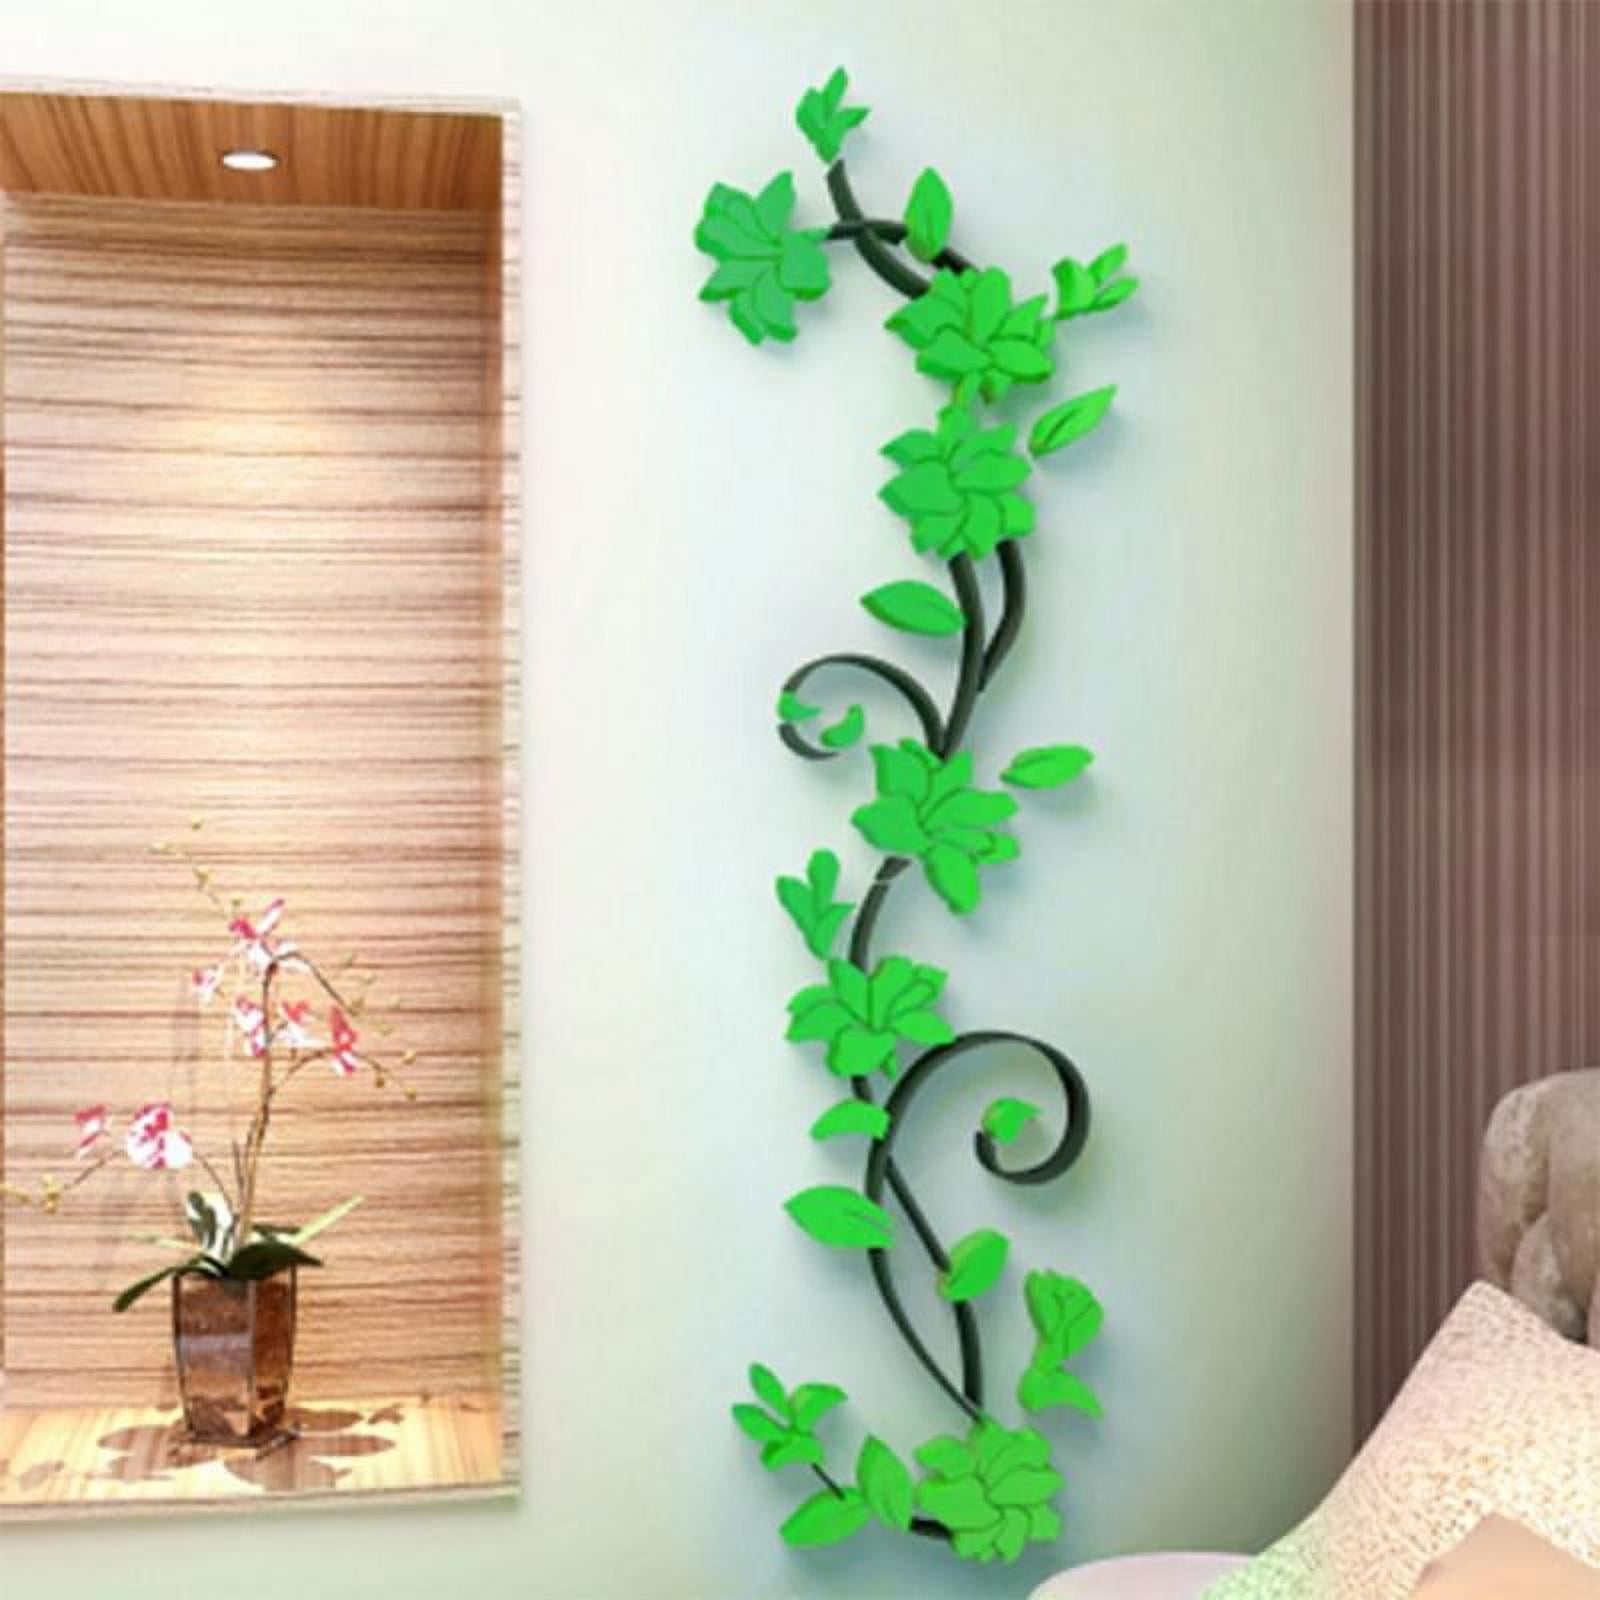 Details about   3D PVC Self Adhesive Door Wall Fridge Sticker Decal Mural Home Decor Wallpaper 